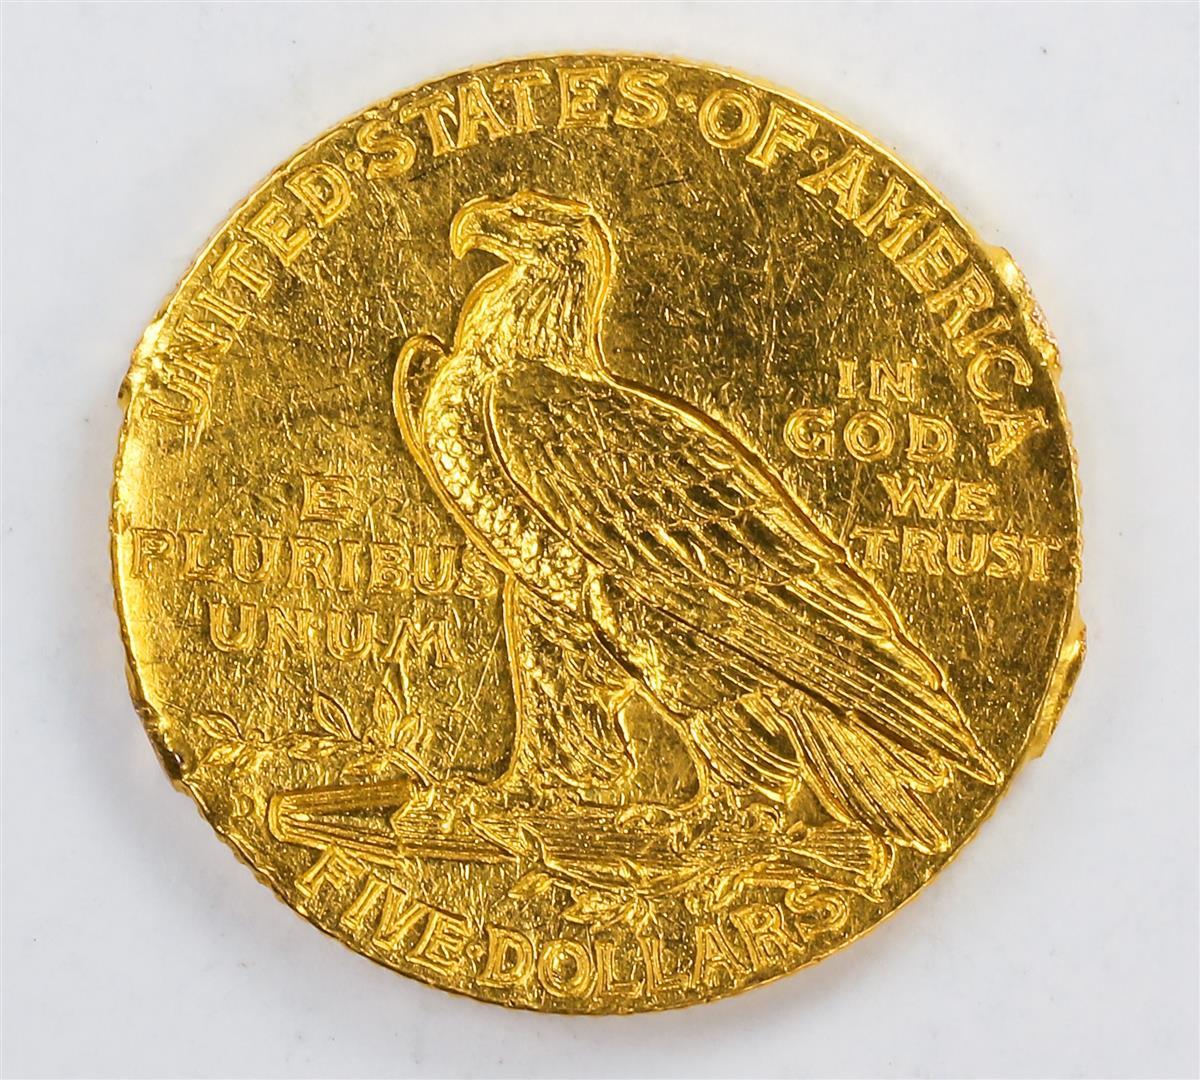 1909-D $5 Indian Head Half Eagle Gold Coin C